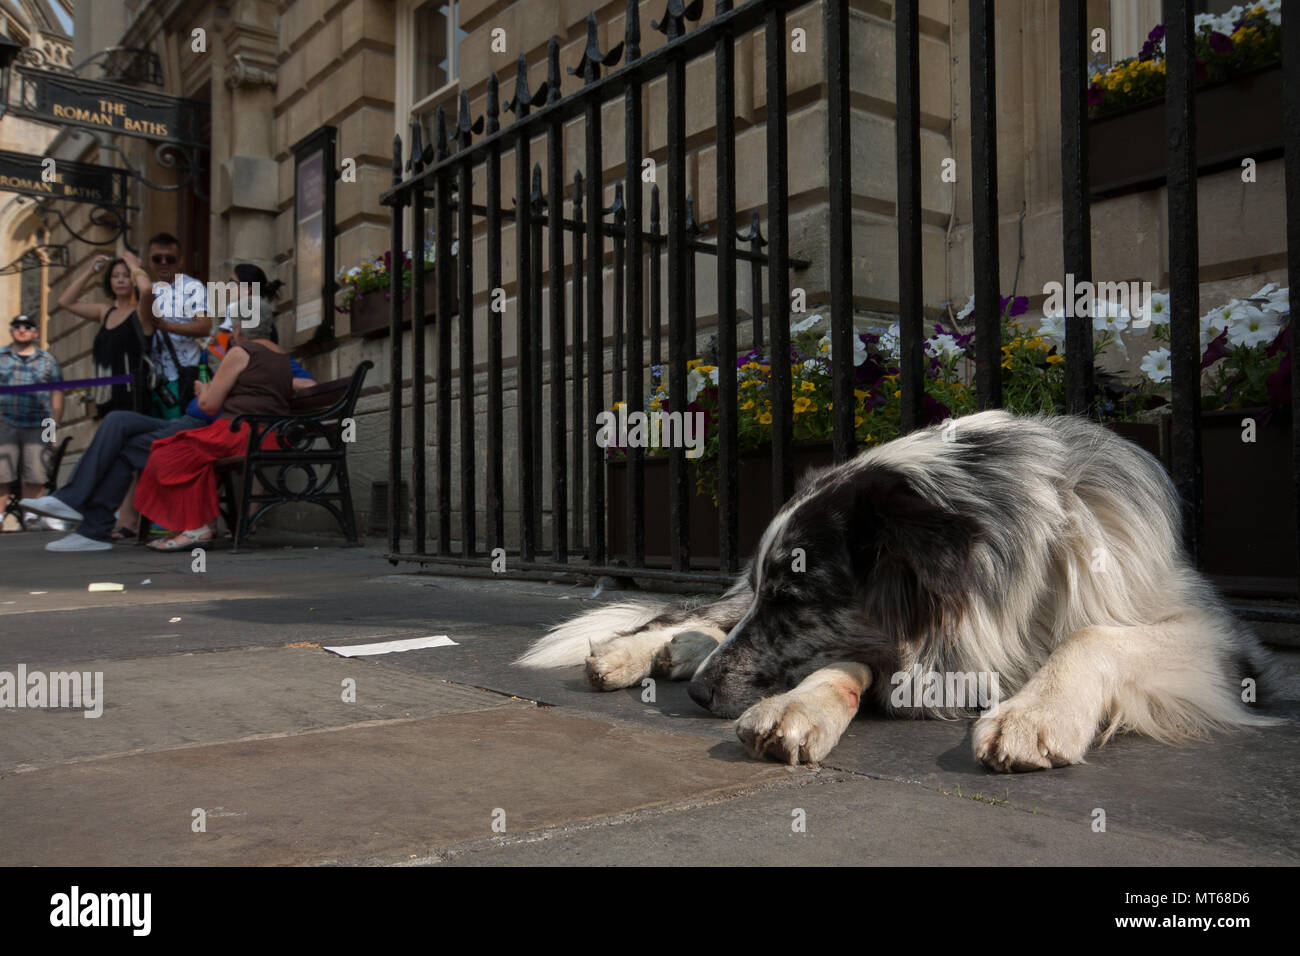 Stray dog sleeping on the streets, in city of Bath, England, UK. Stock Photo